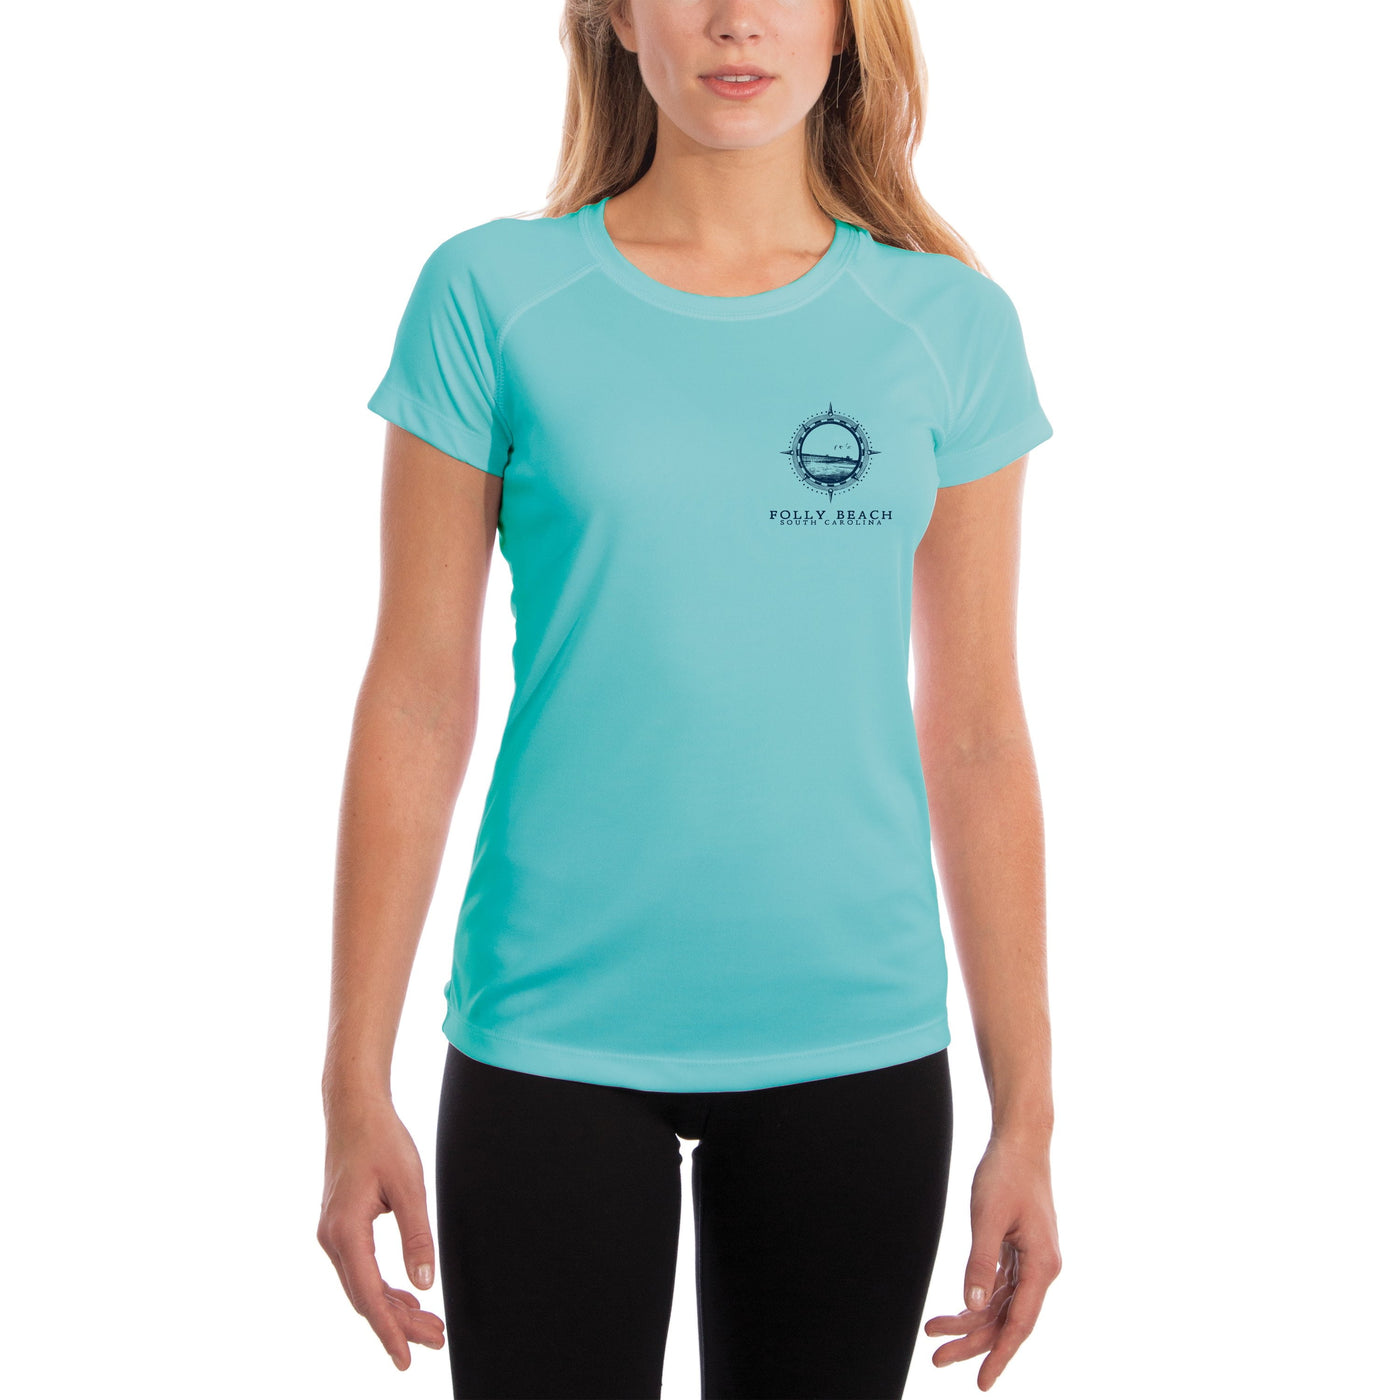 Compass Vintage Folly Beach Women's UPF 50+ Classic Fit Short Sleeve T-shirt